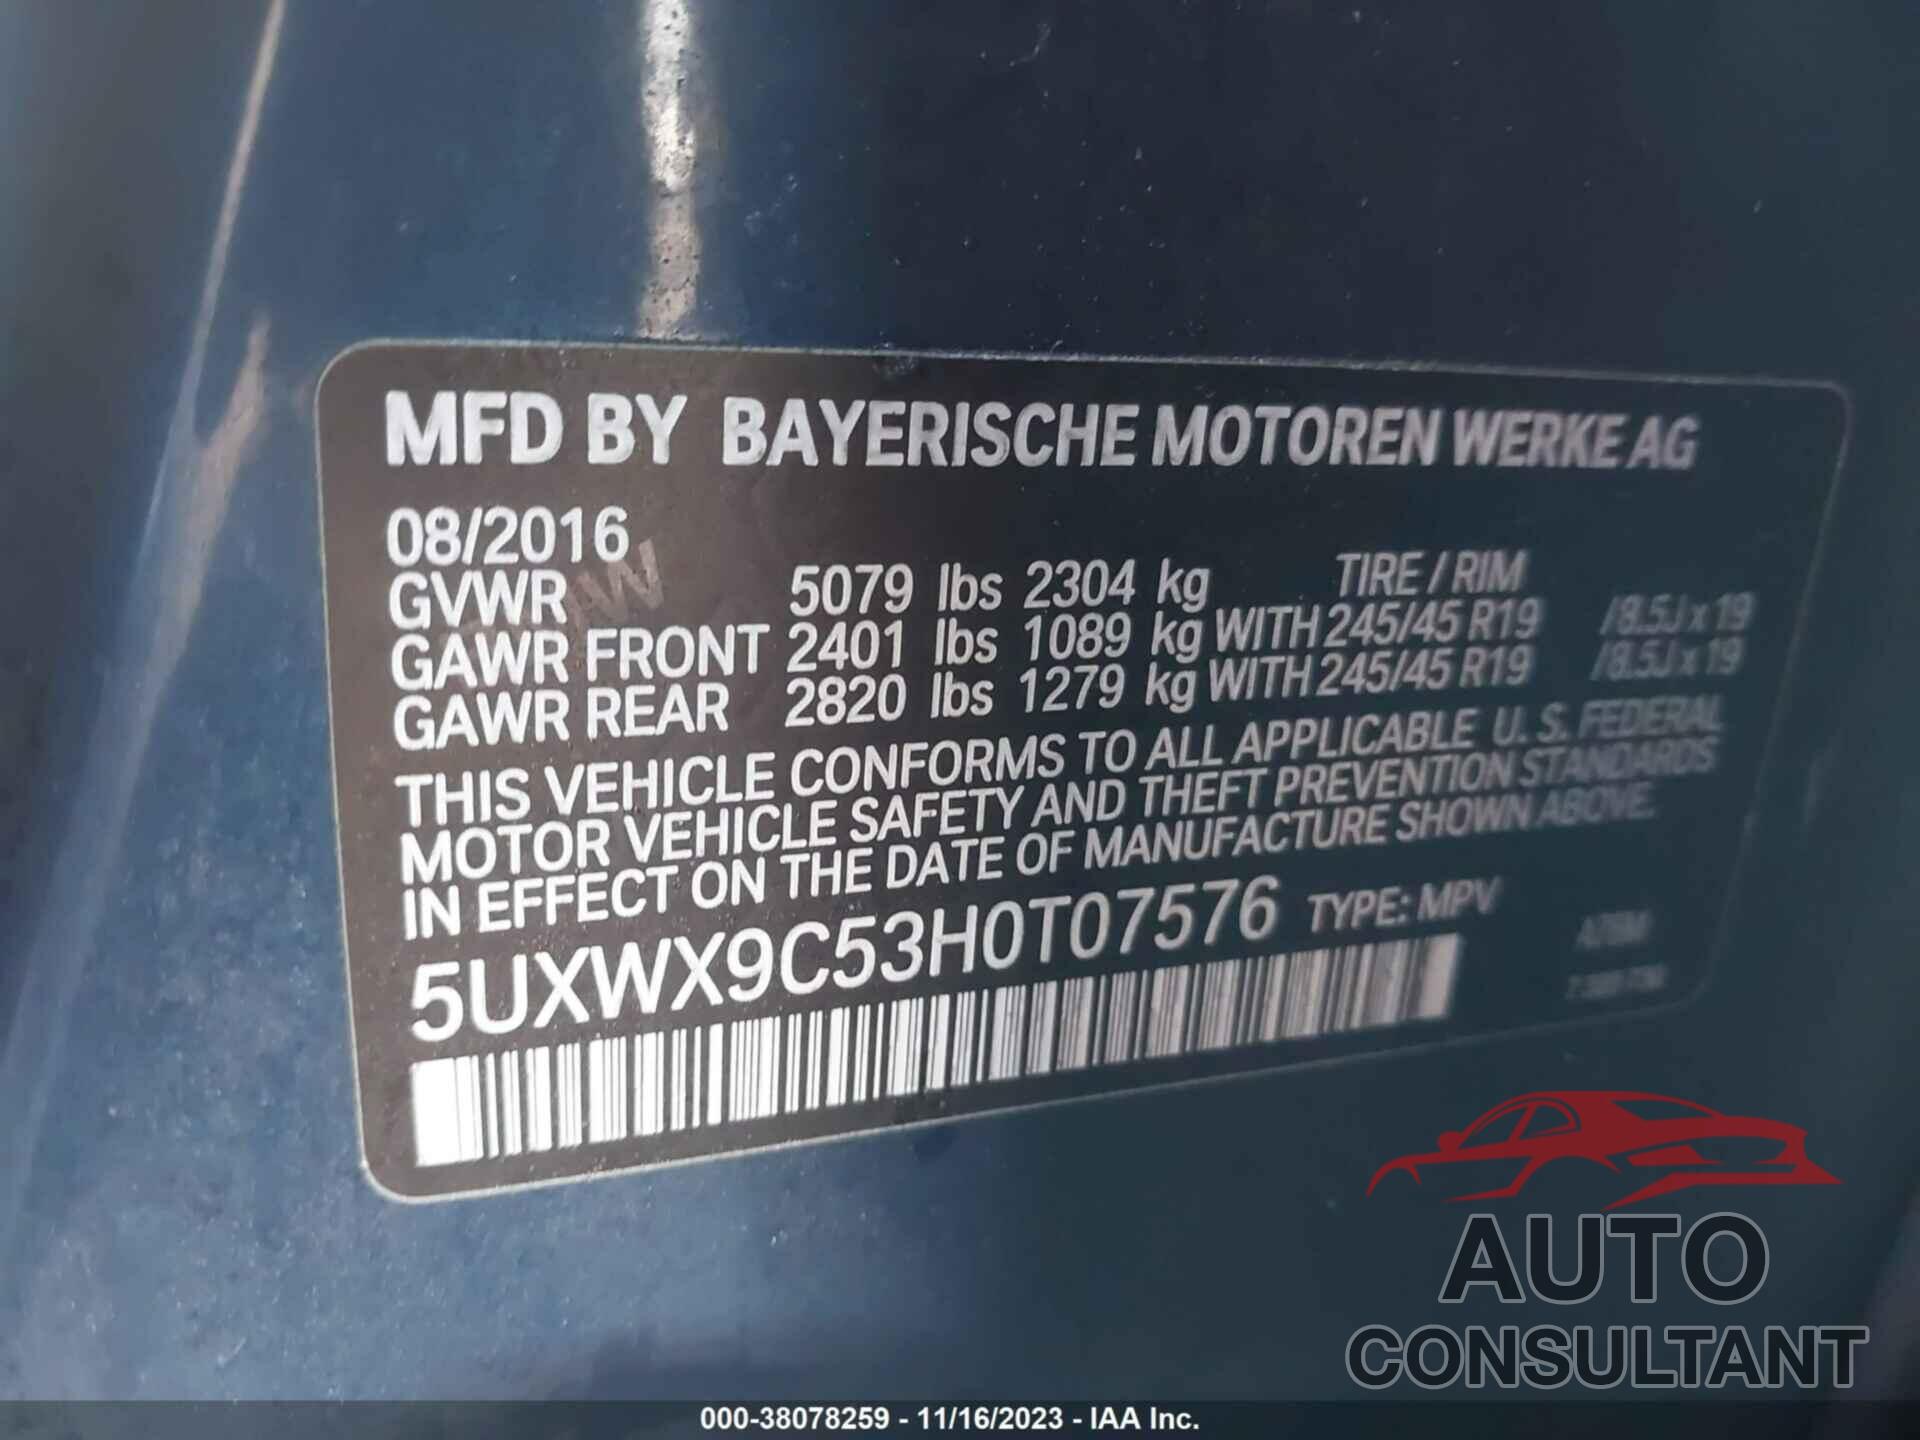 BMW X3 2017 - 5UXWX9C53H0T07576